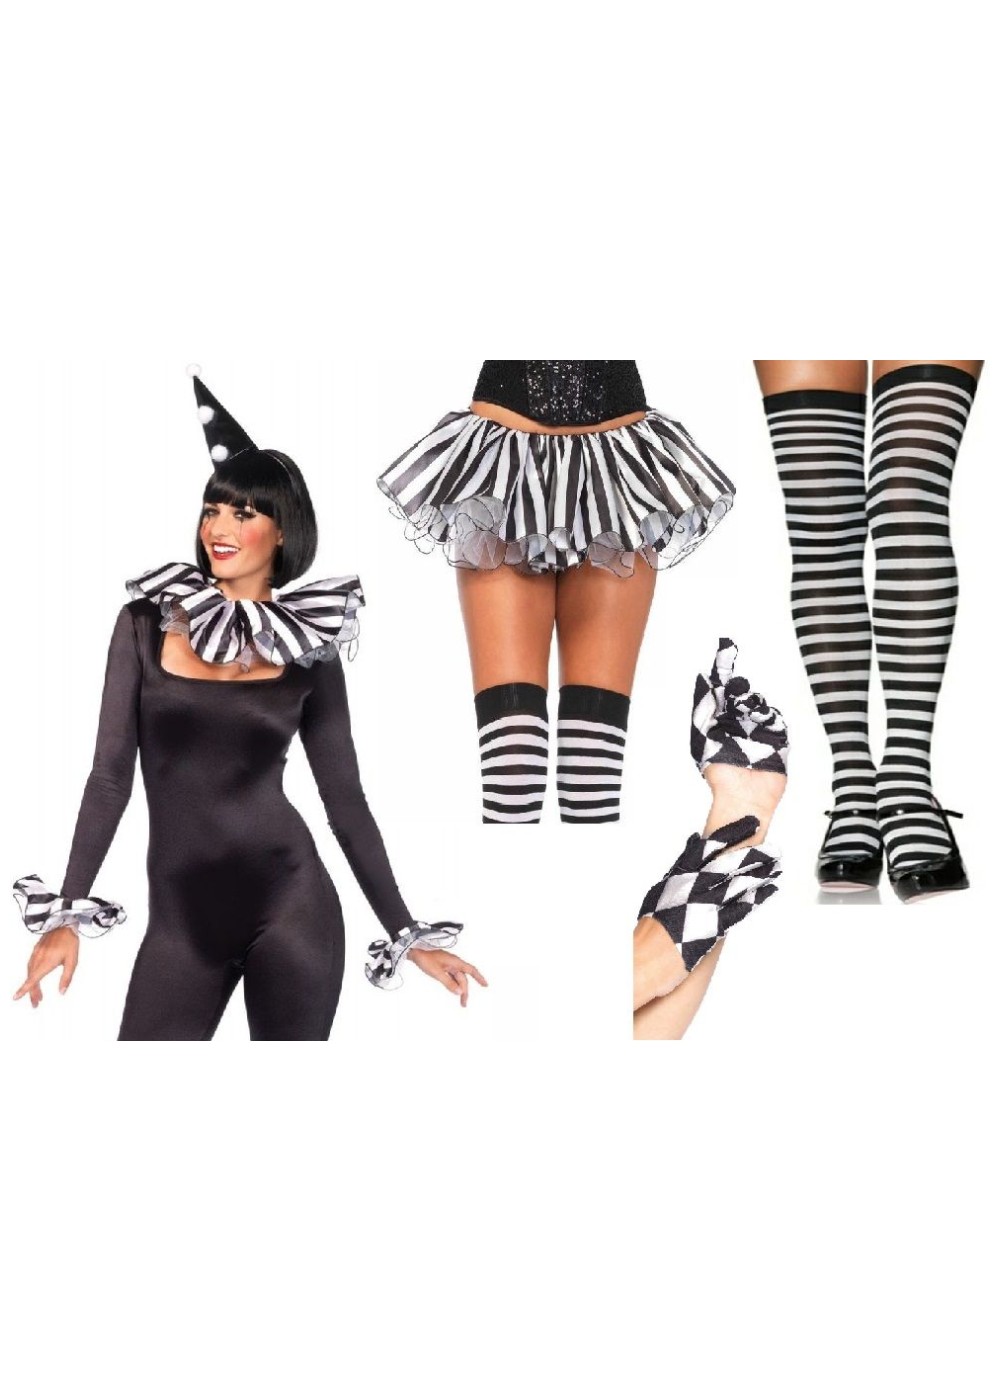 Monochrome Harlequin Womans Costume Kit Accessories 7205